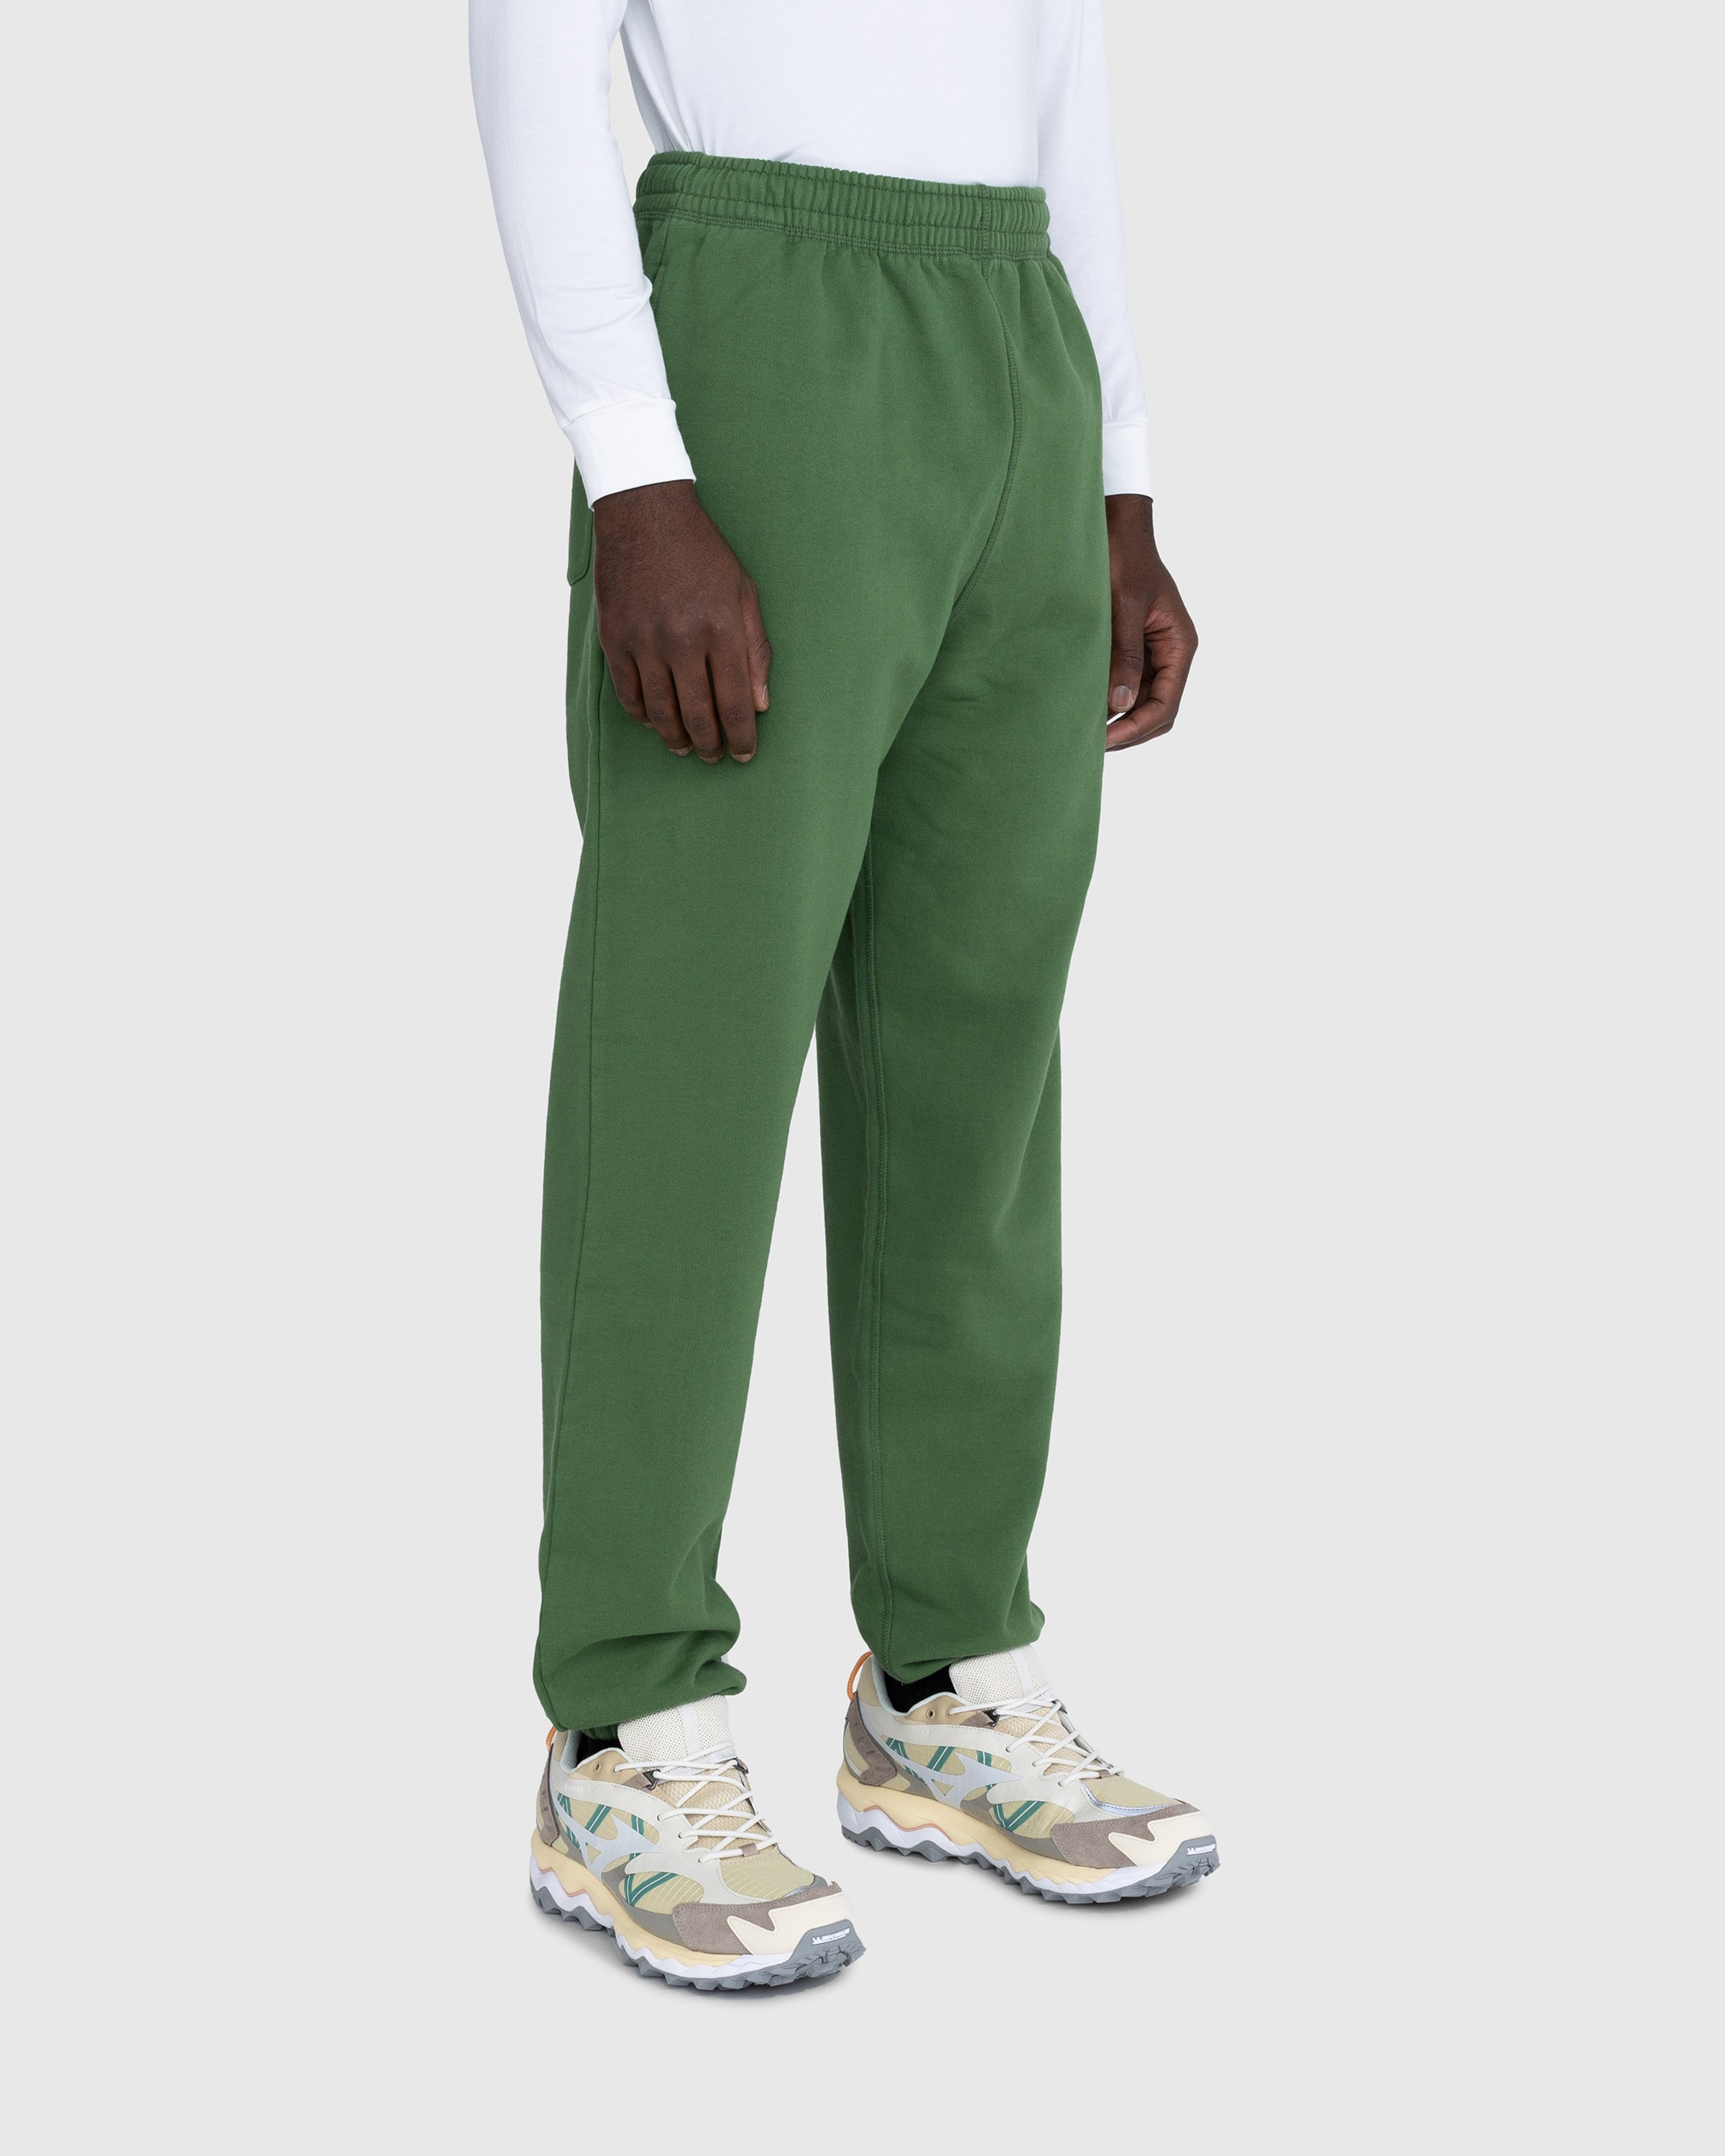 Highsnobiety - Heavy Fleece Pant Dark Green - Clothing - Green - Image 4